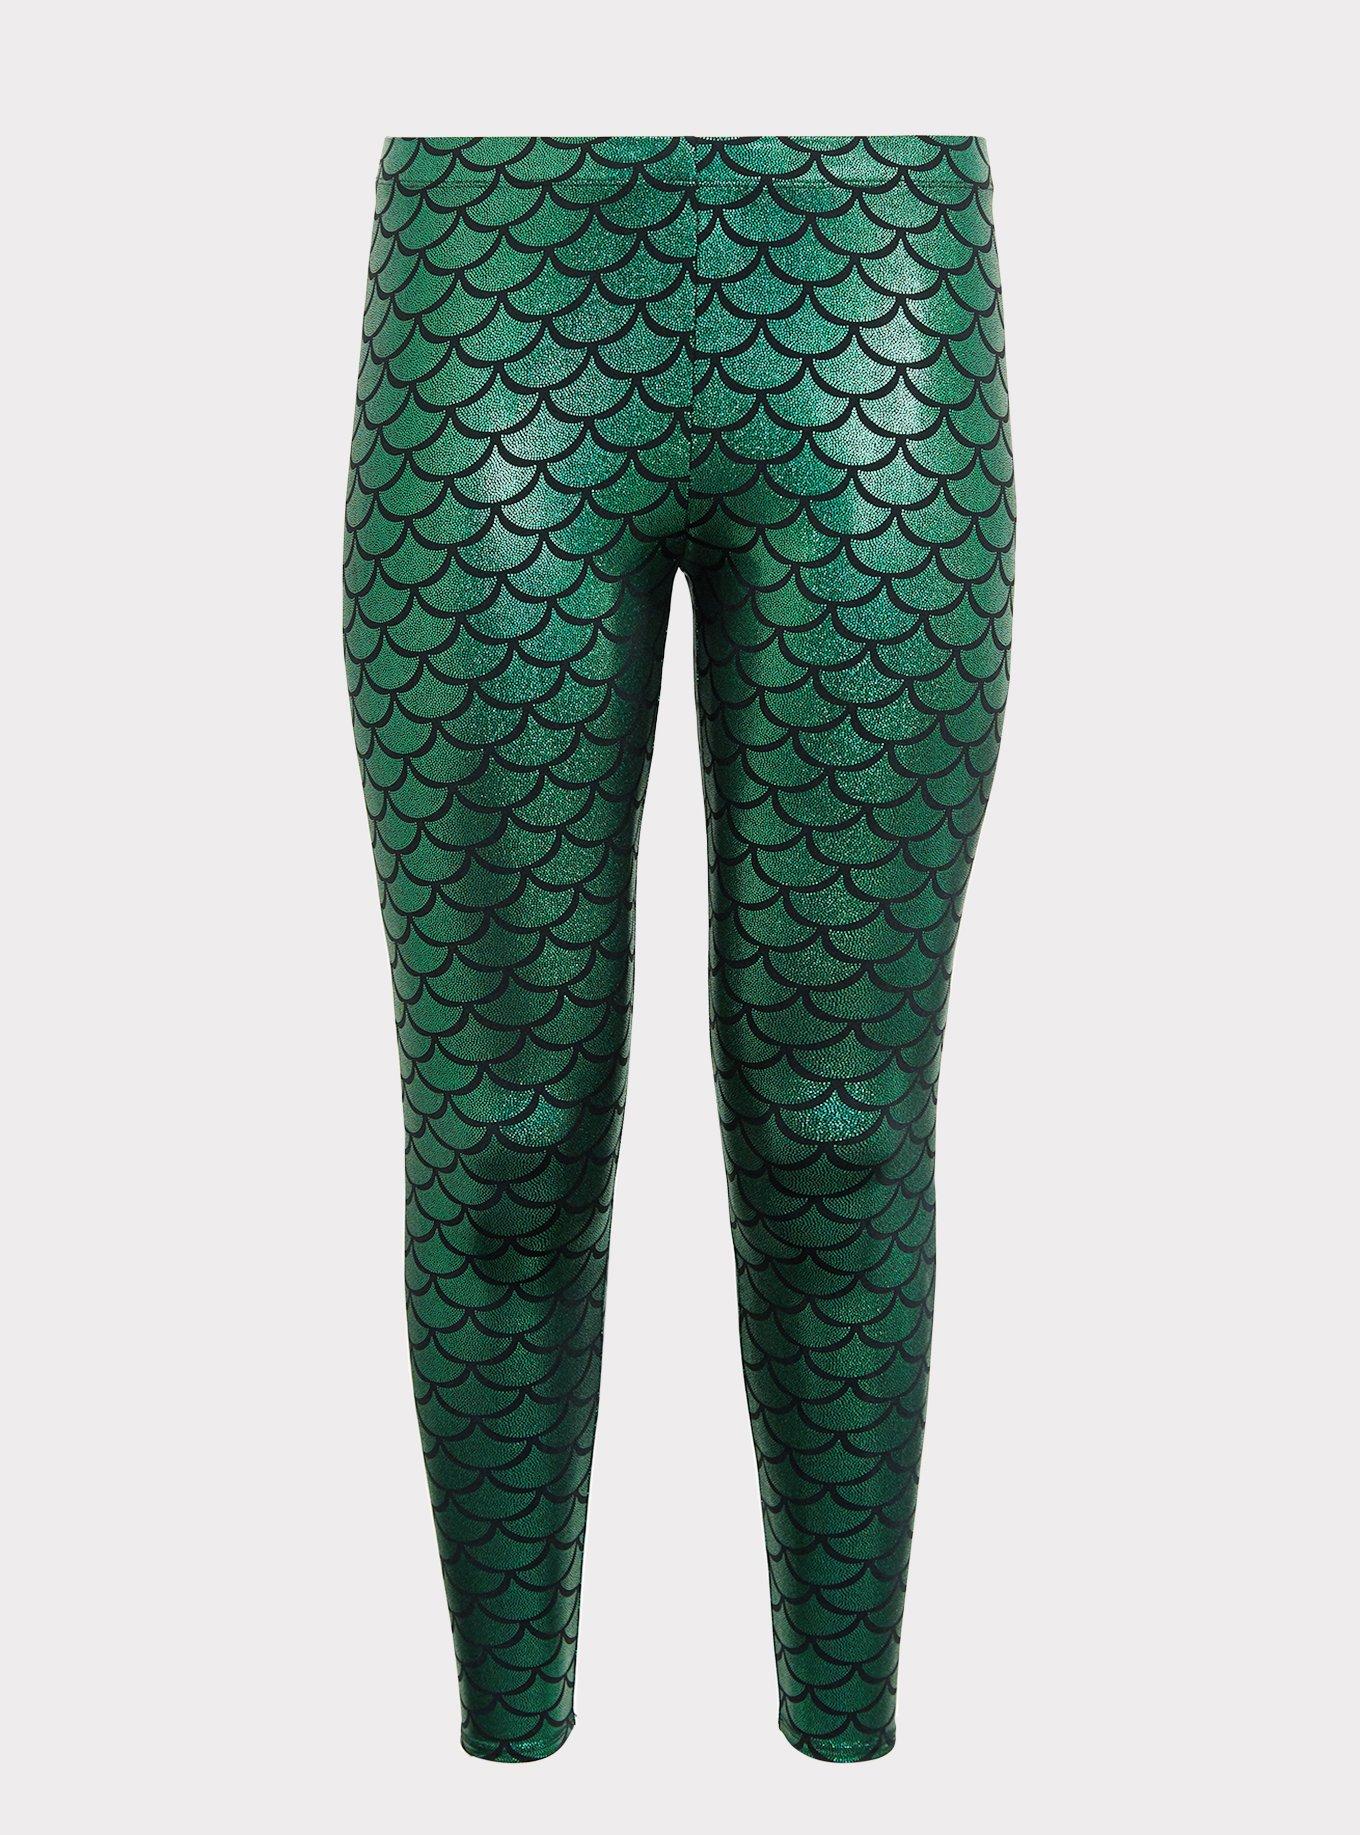  Alaroo Shiny Fish Scale Mermaid Leggings for Women Pants Green  S : Clothing, Shoes & Jewelry